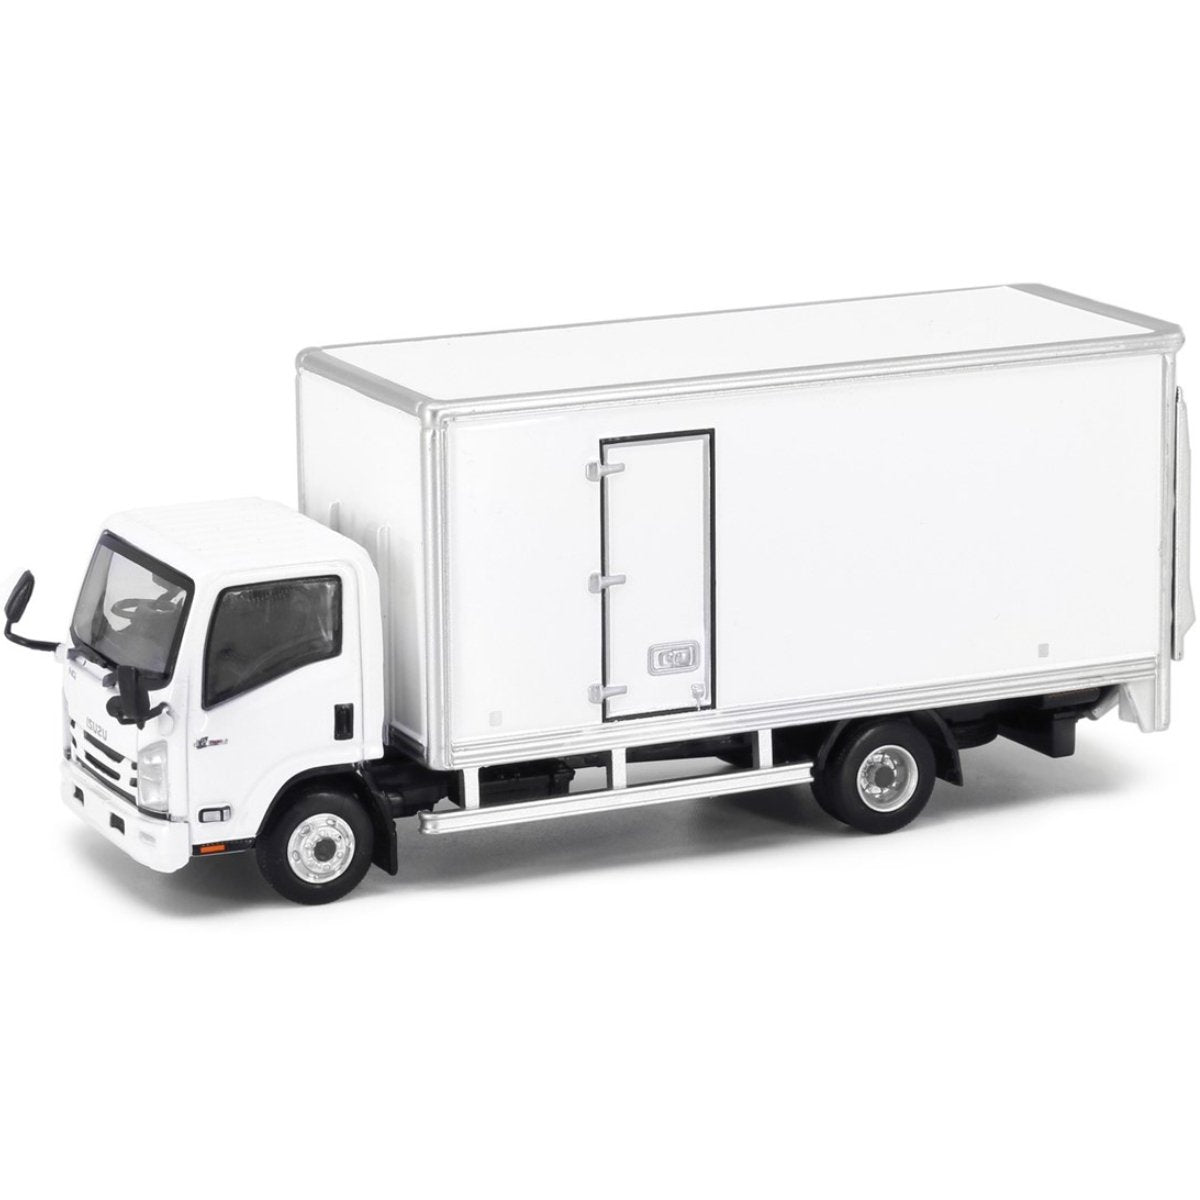 Tiny Models Isuzu N Series Box Lorry (1:64 Scale) - Phillips Hobbies